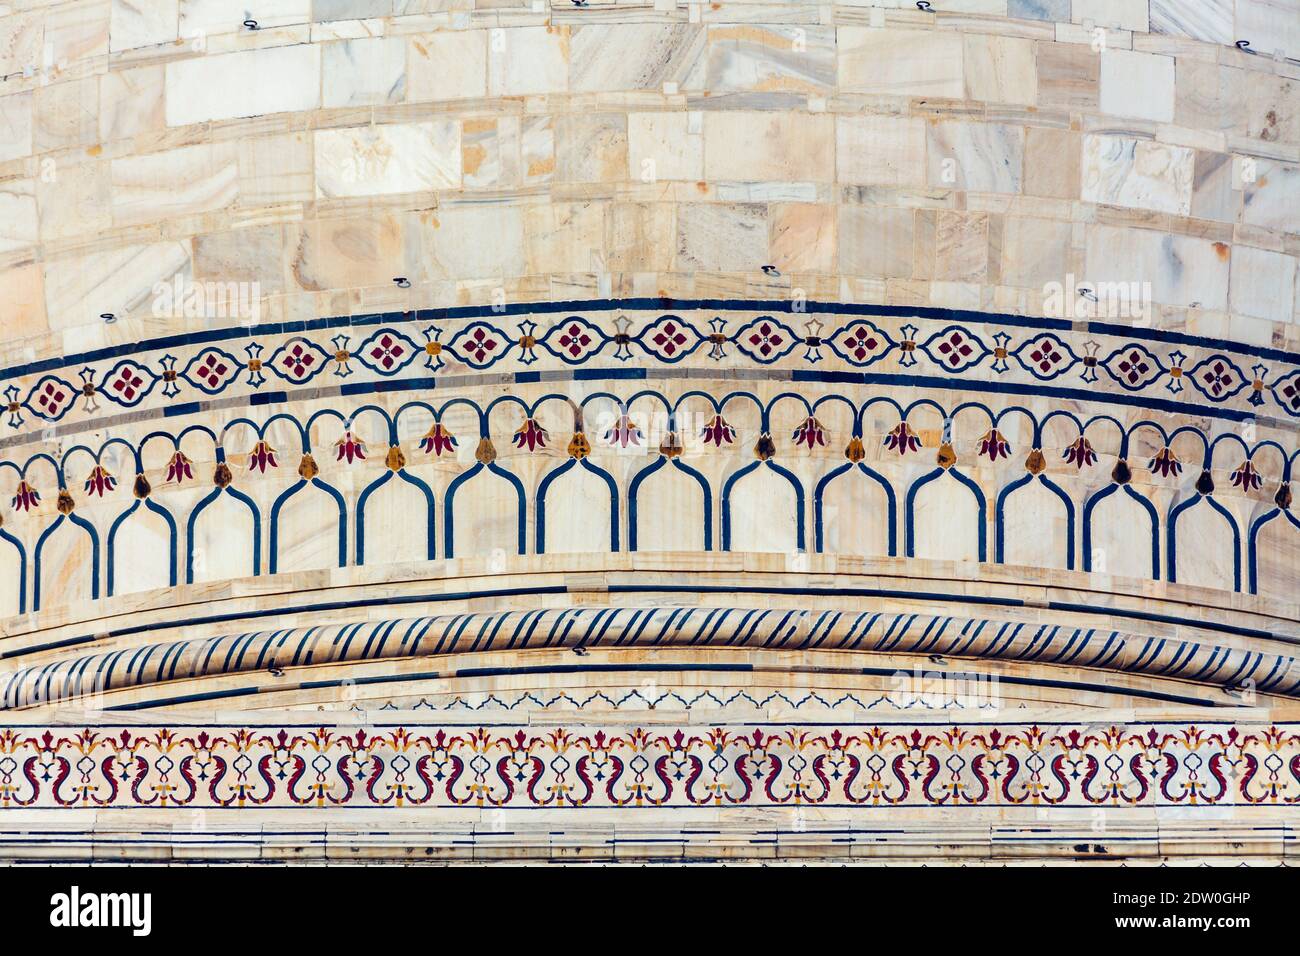 Detalles decorativos sobre el emblemático Taj Mahal, una tumba mausoleo de mármol blanco de Mumtaz Mahal, a la luz de la mañana, Agra, estado indio de Uttar Pradesh Foto de stock